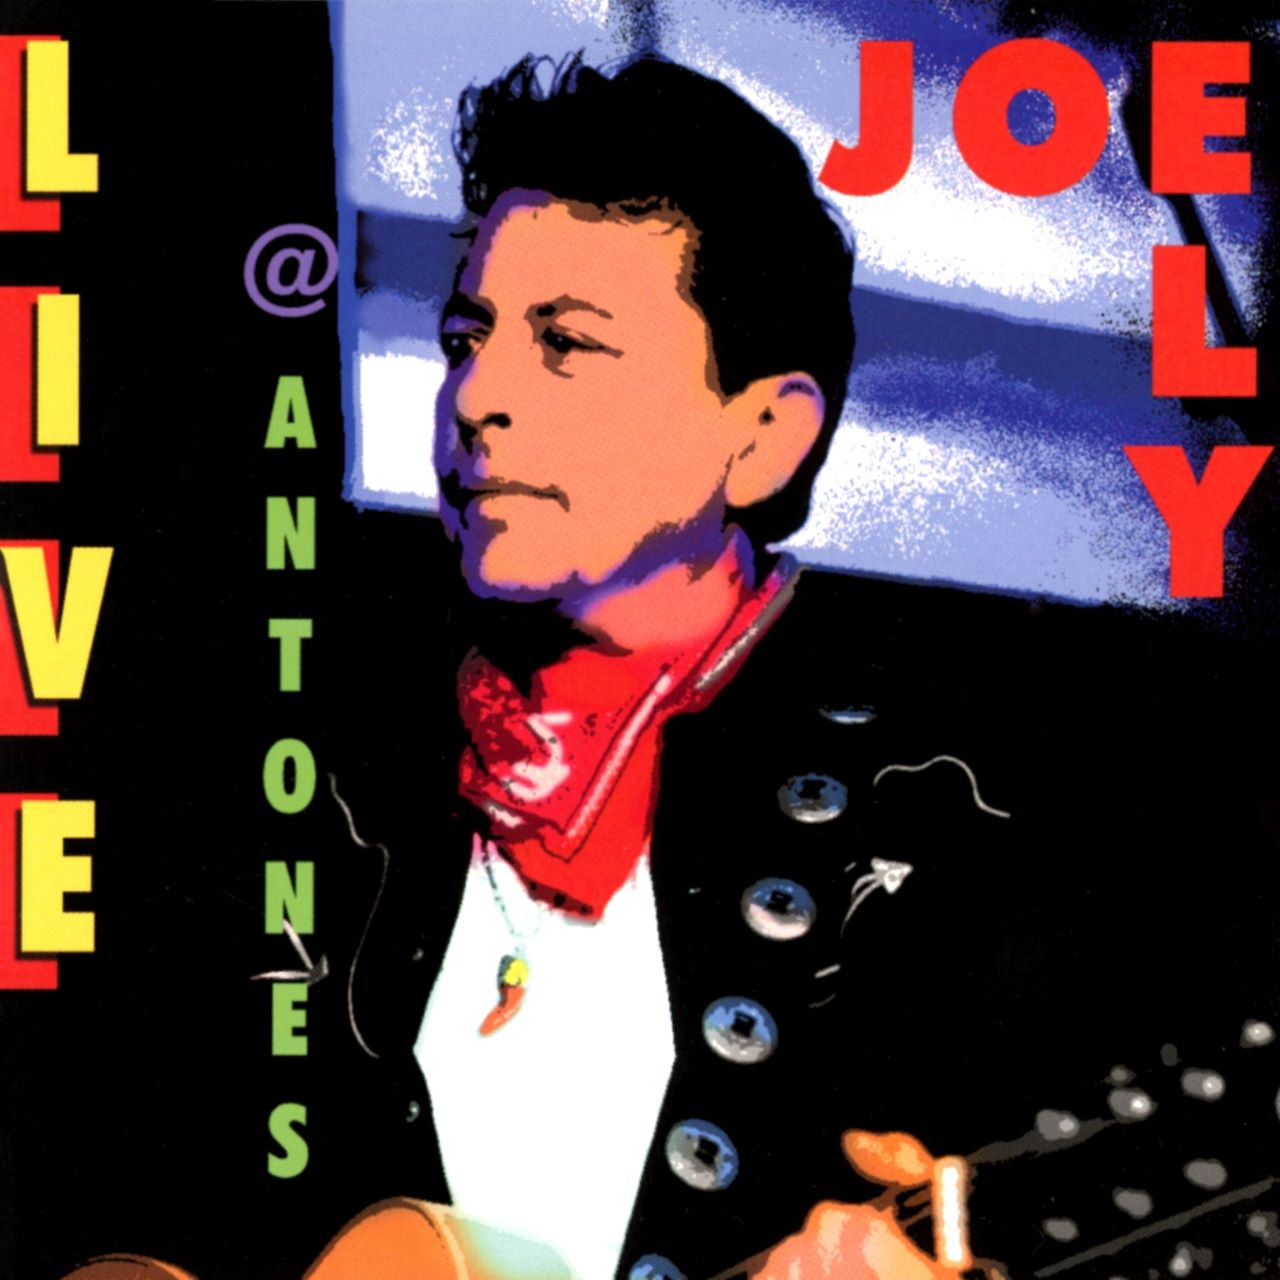 Joe Ely - Live At Antone’s copertina disco